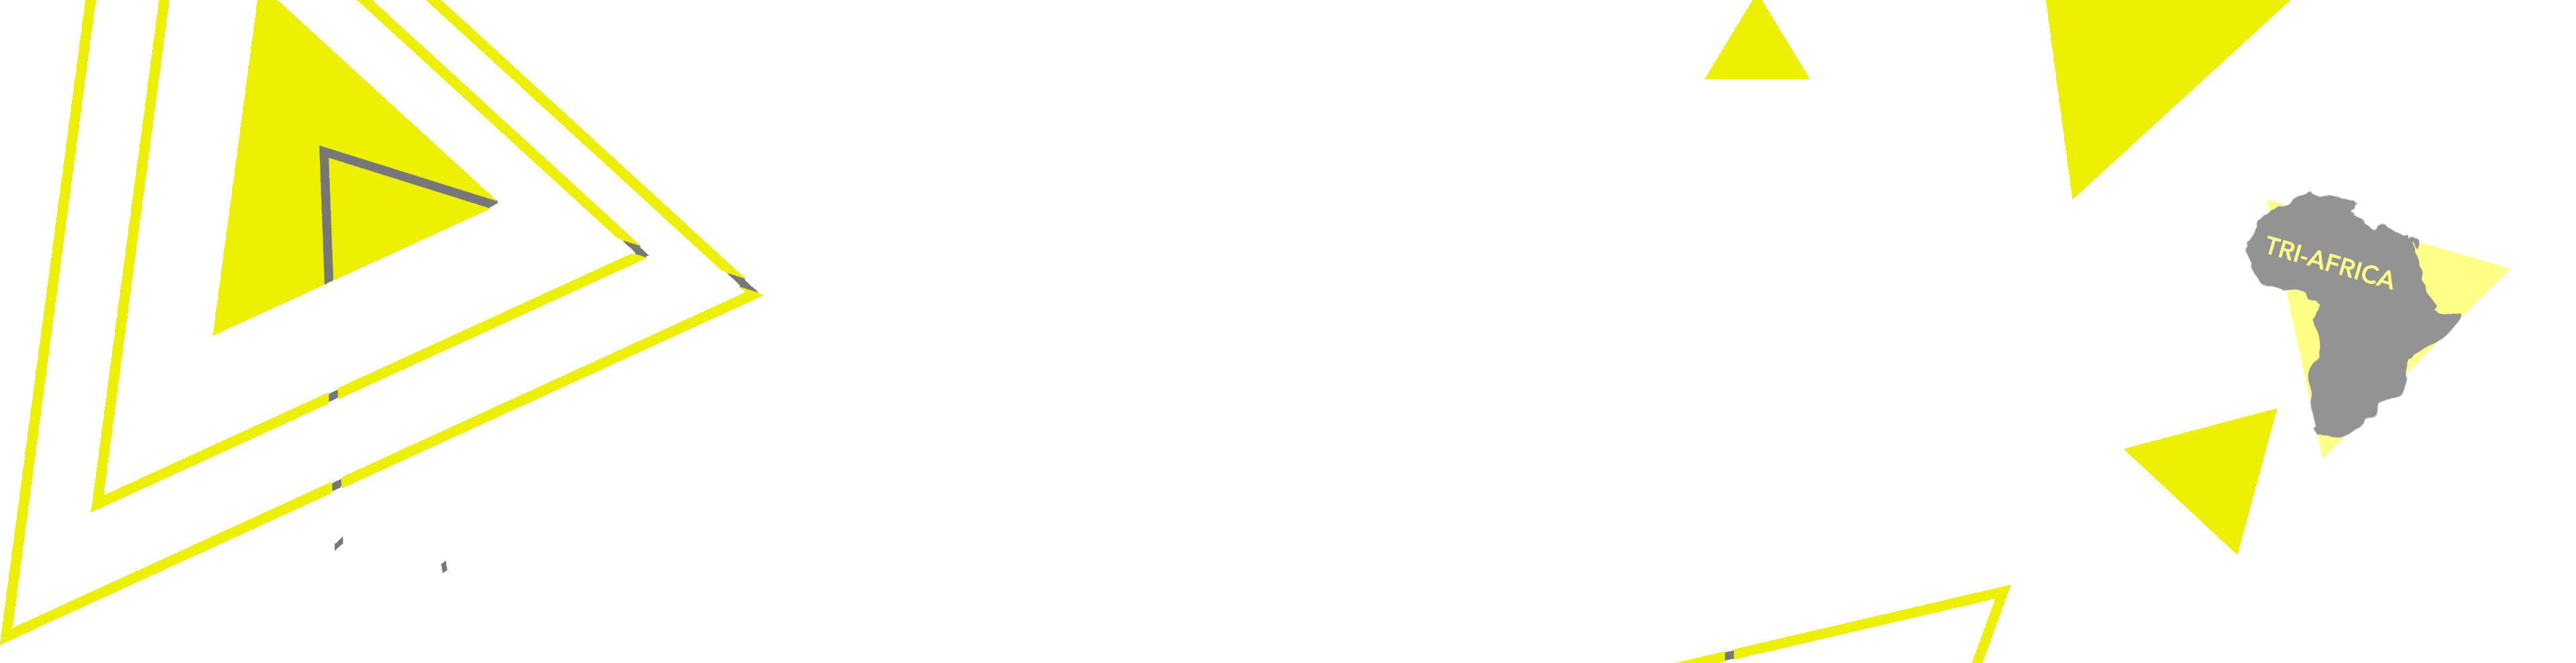 Carducci brand top image